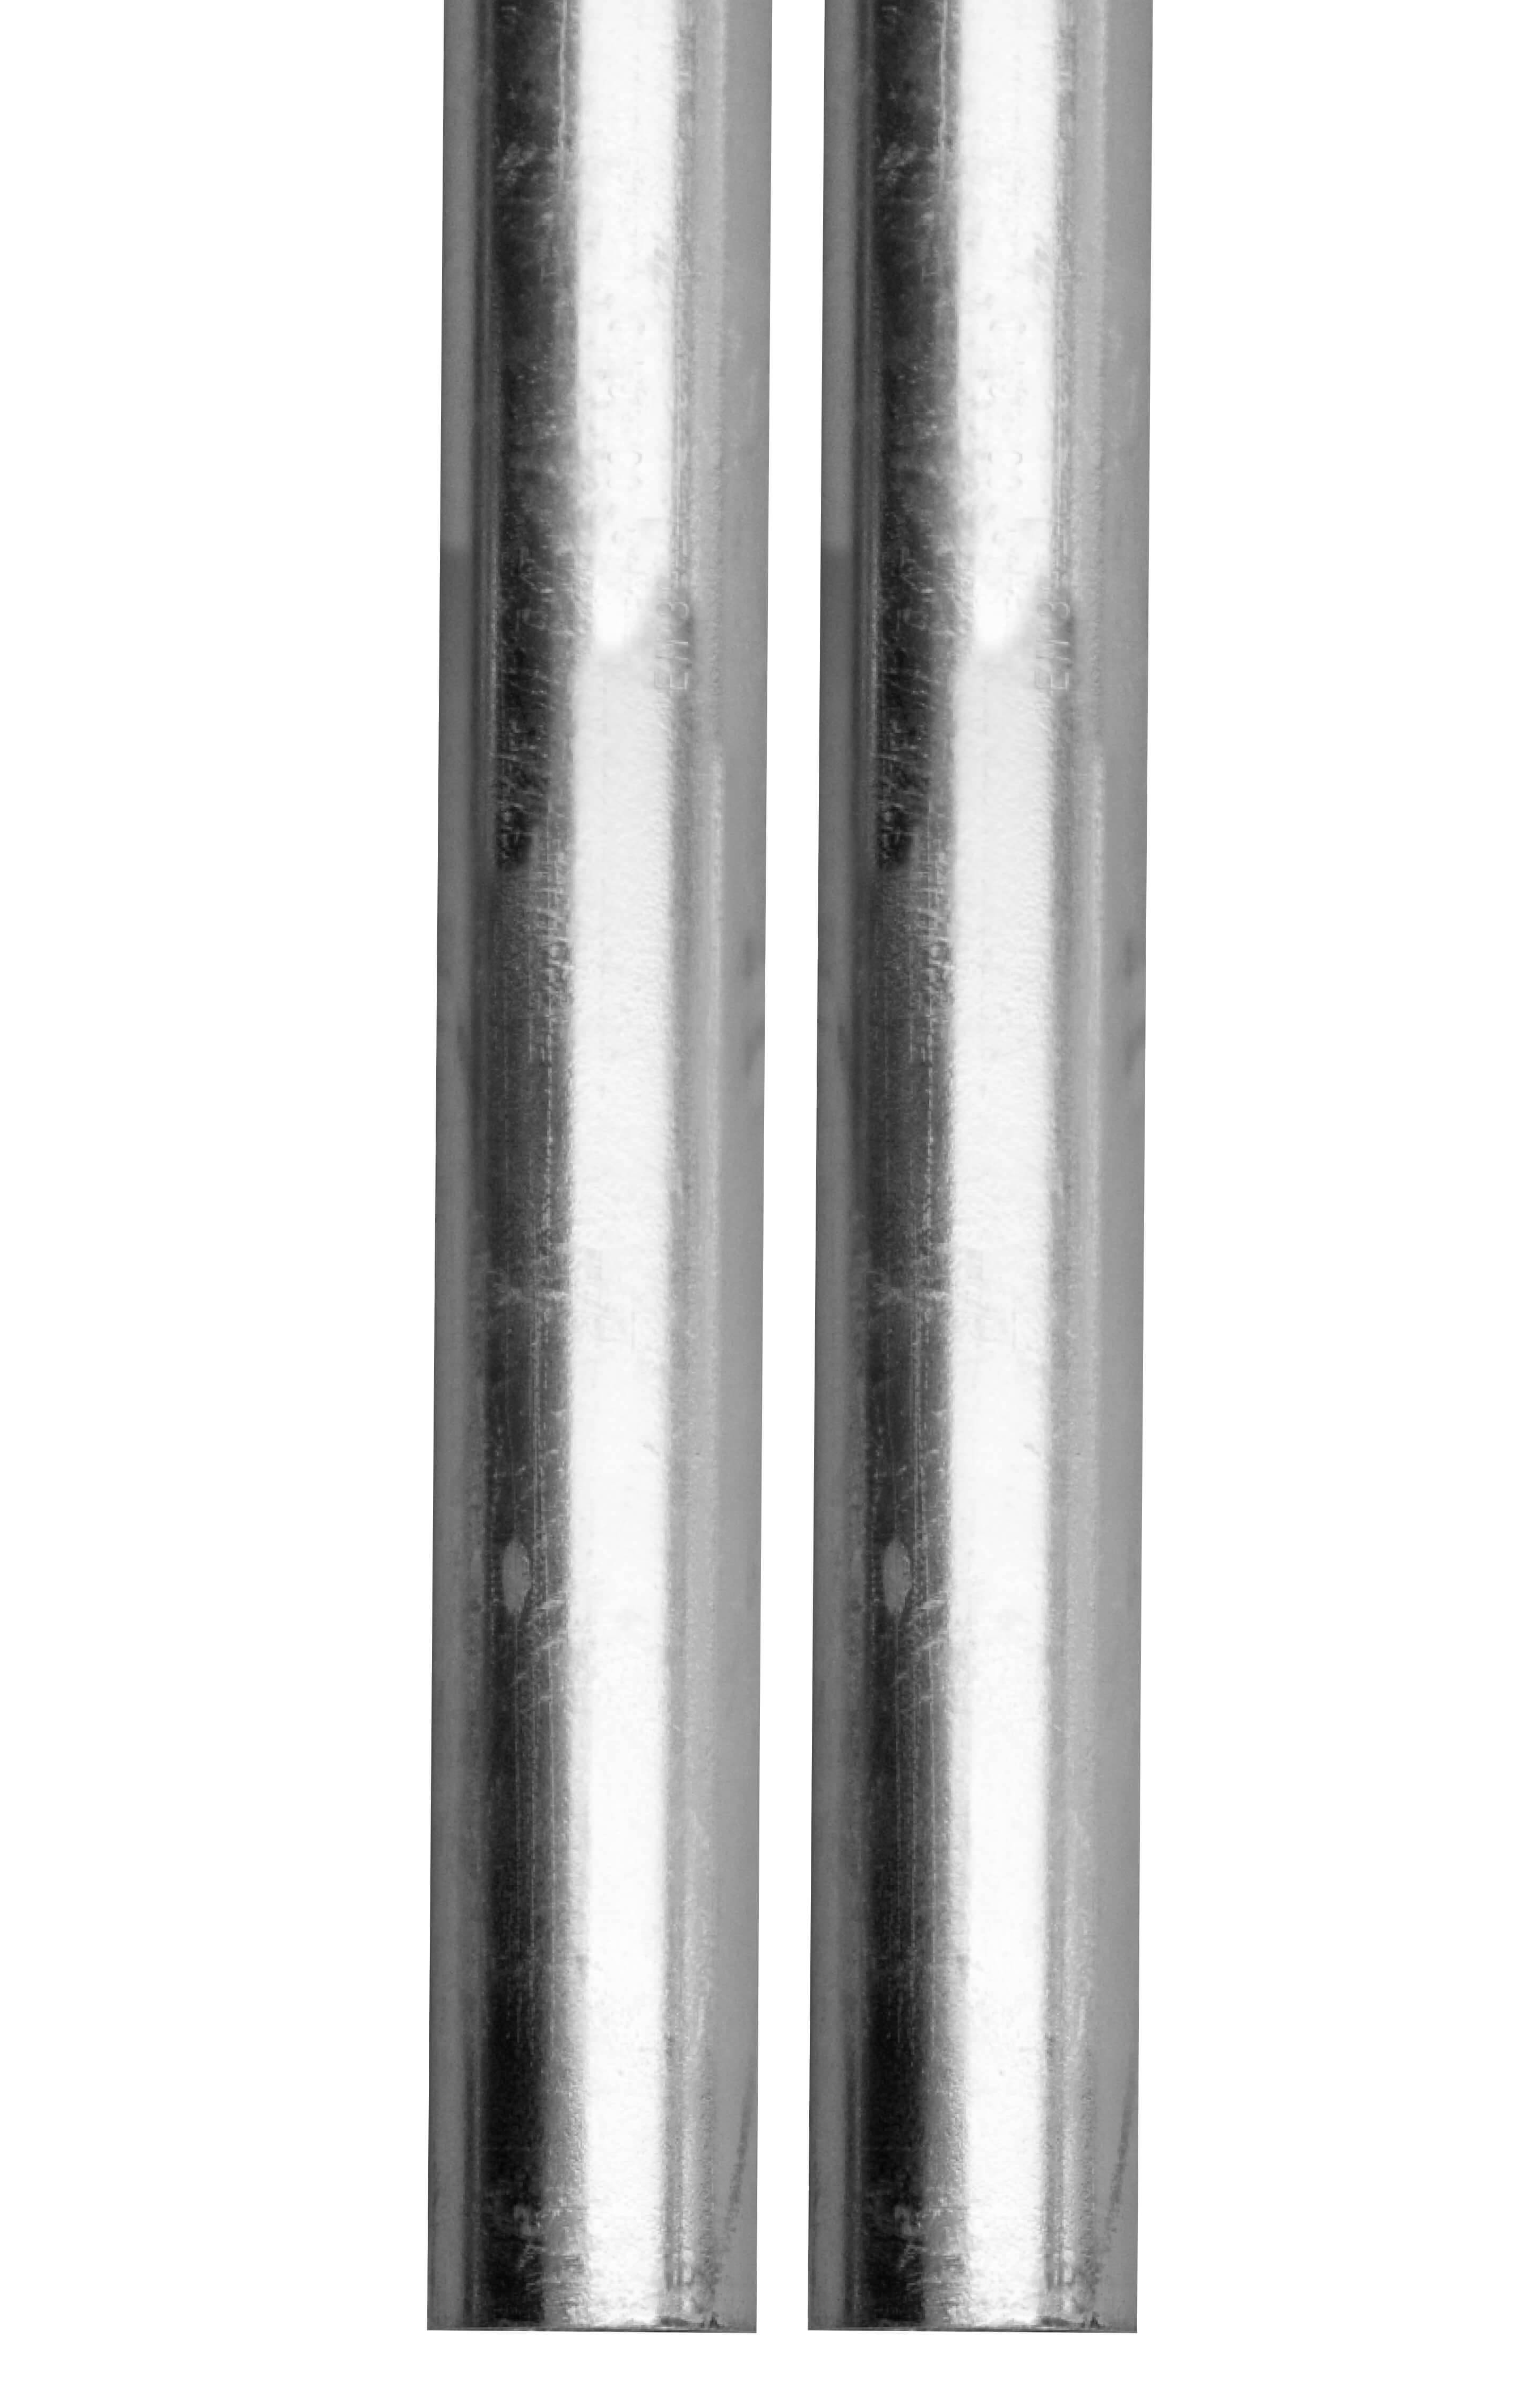 Tube hydraulikrohr Couronne 6x1 mm 1 m en10305-3